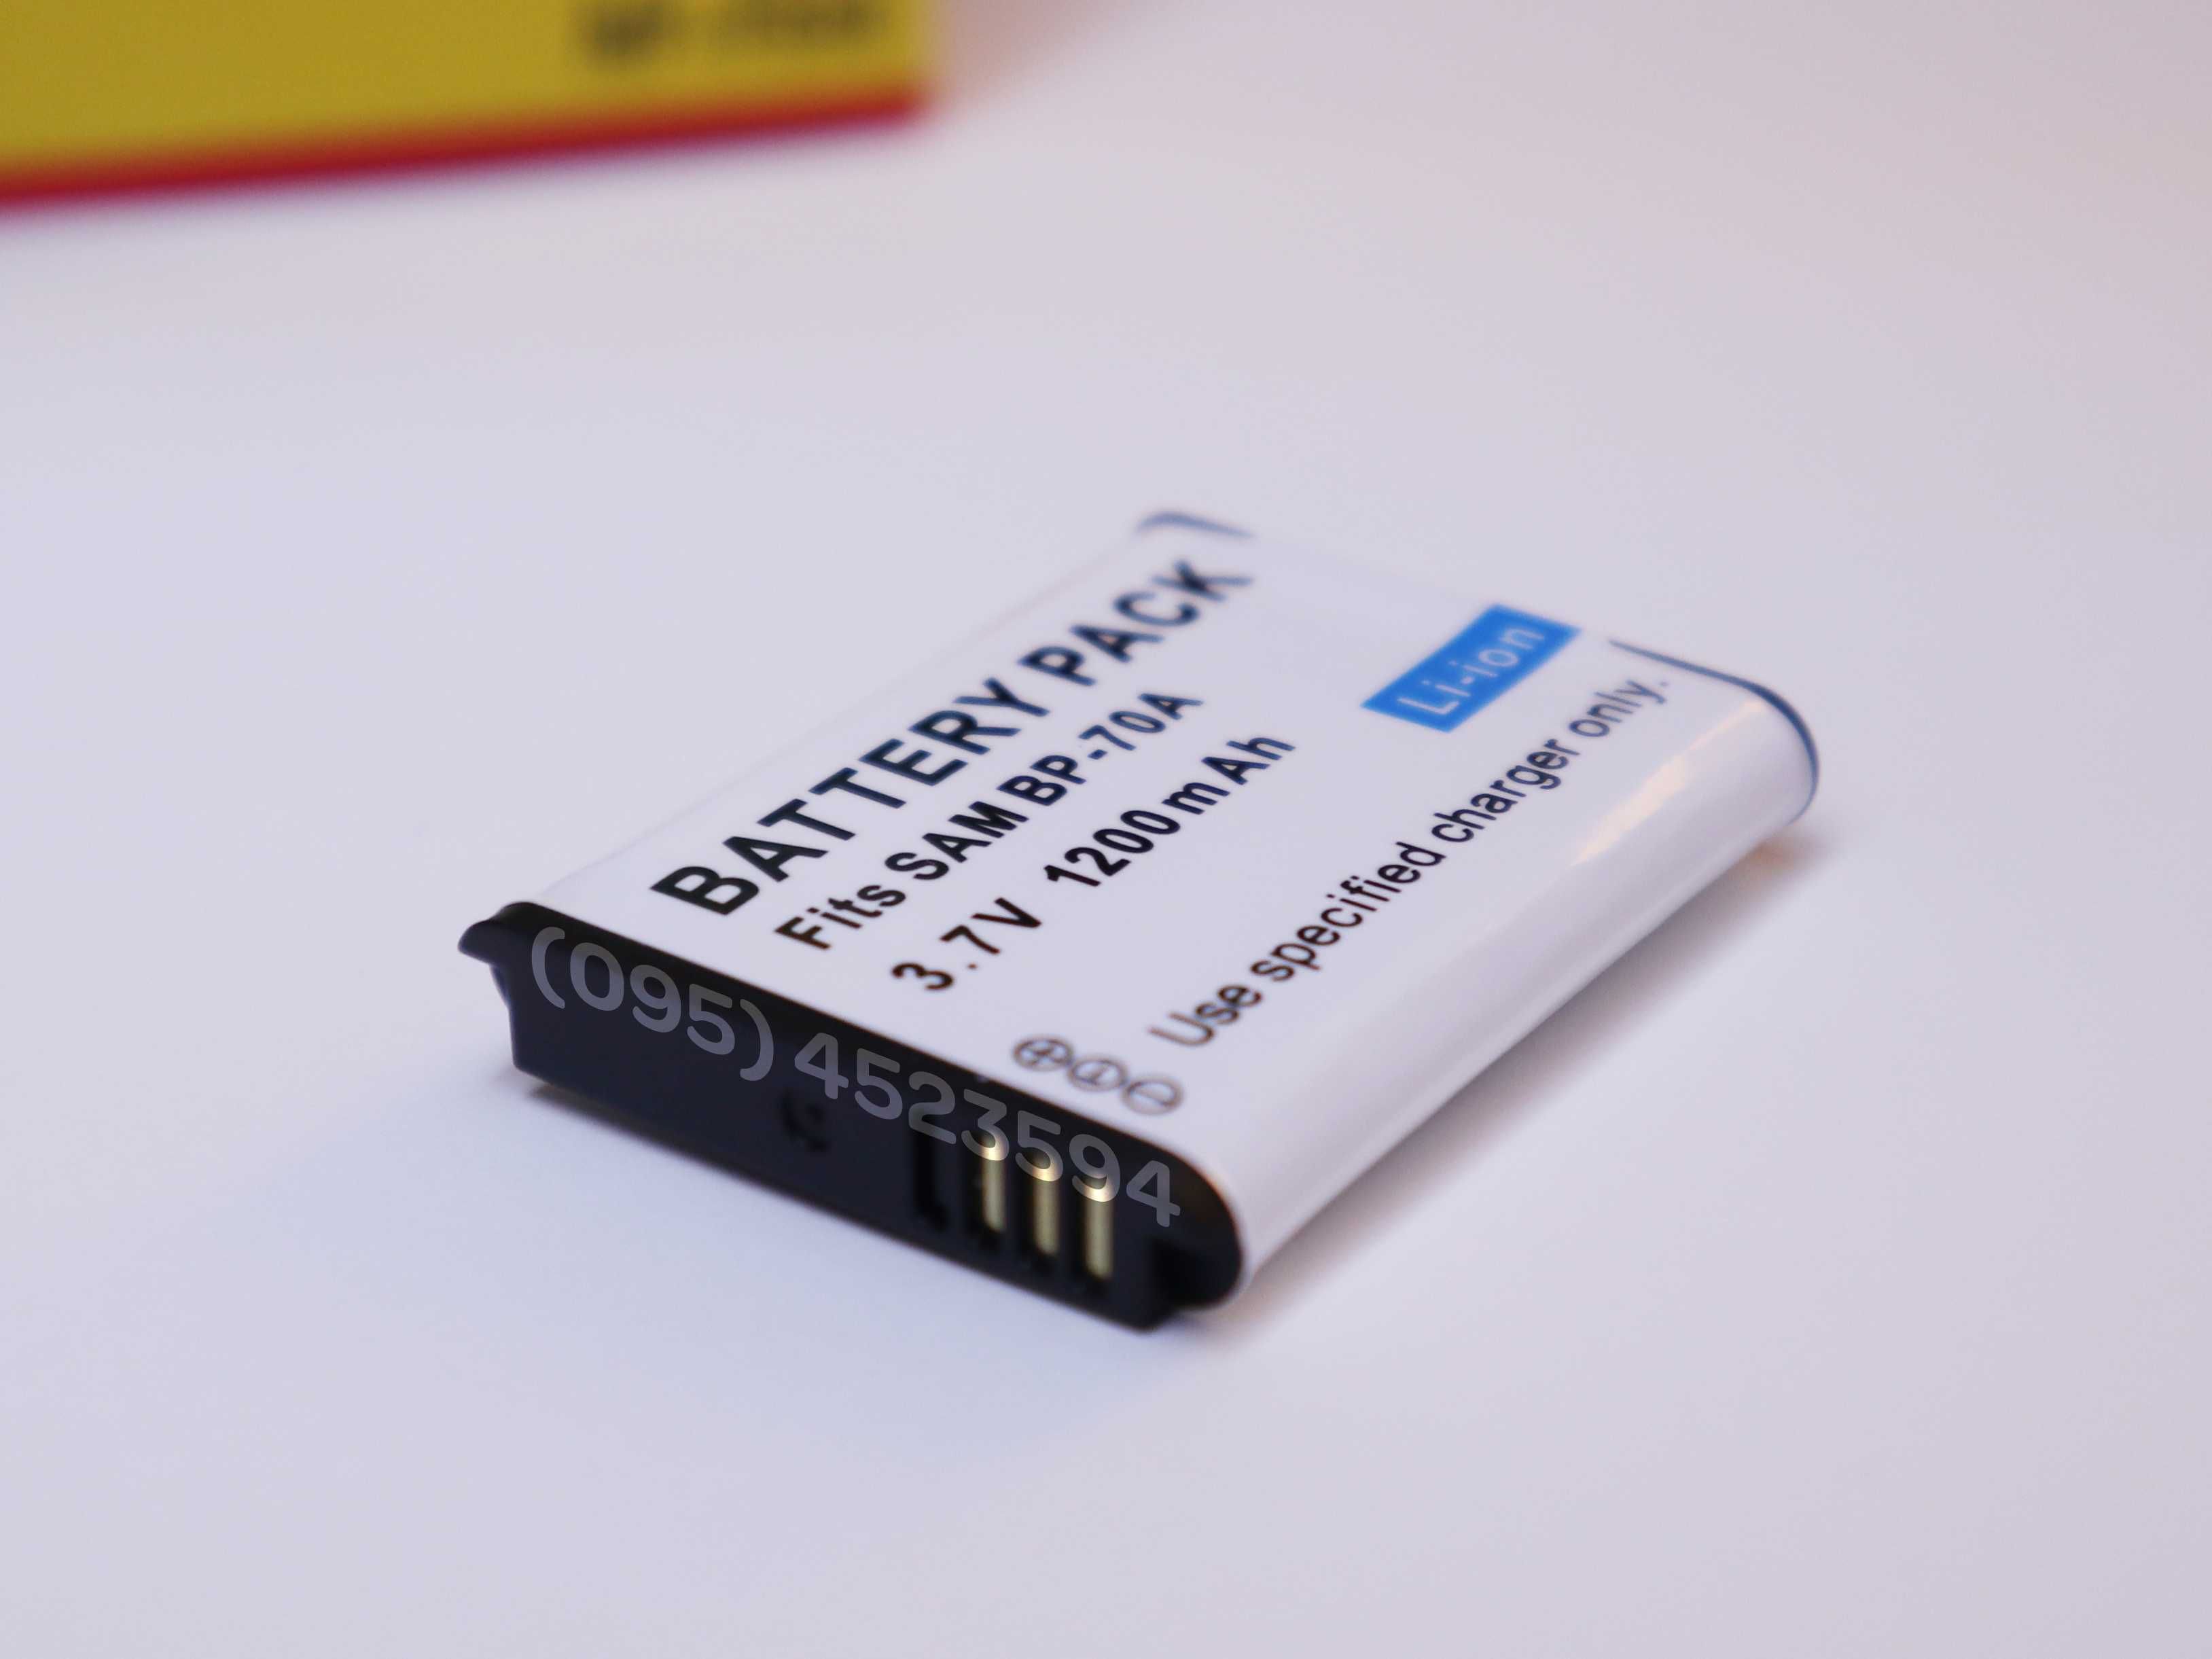 Акумулятор для Samsung BP-70A 1200mA батарея аккумулятор